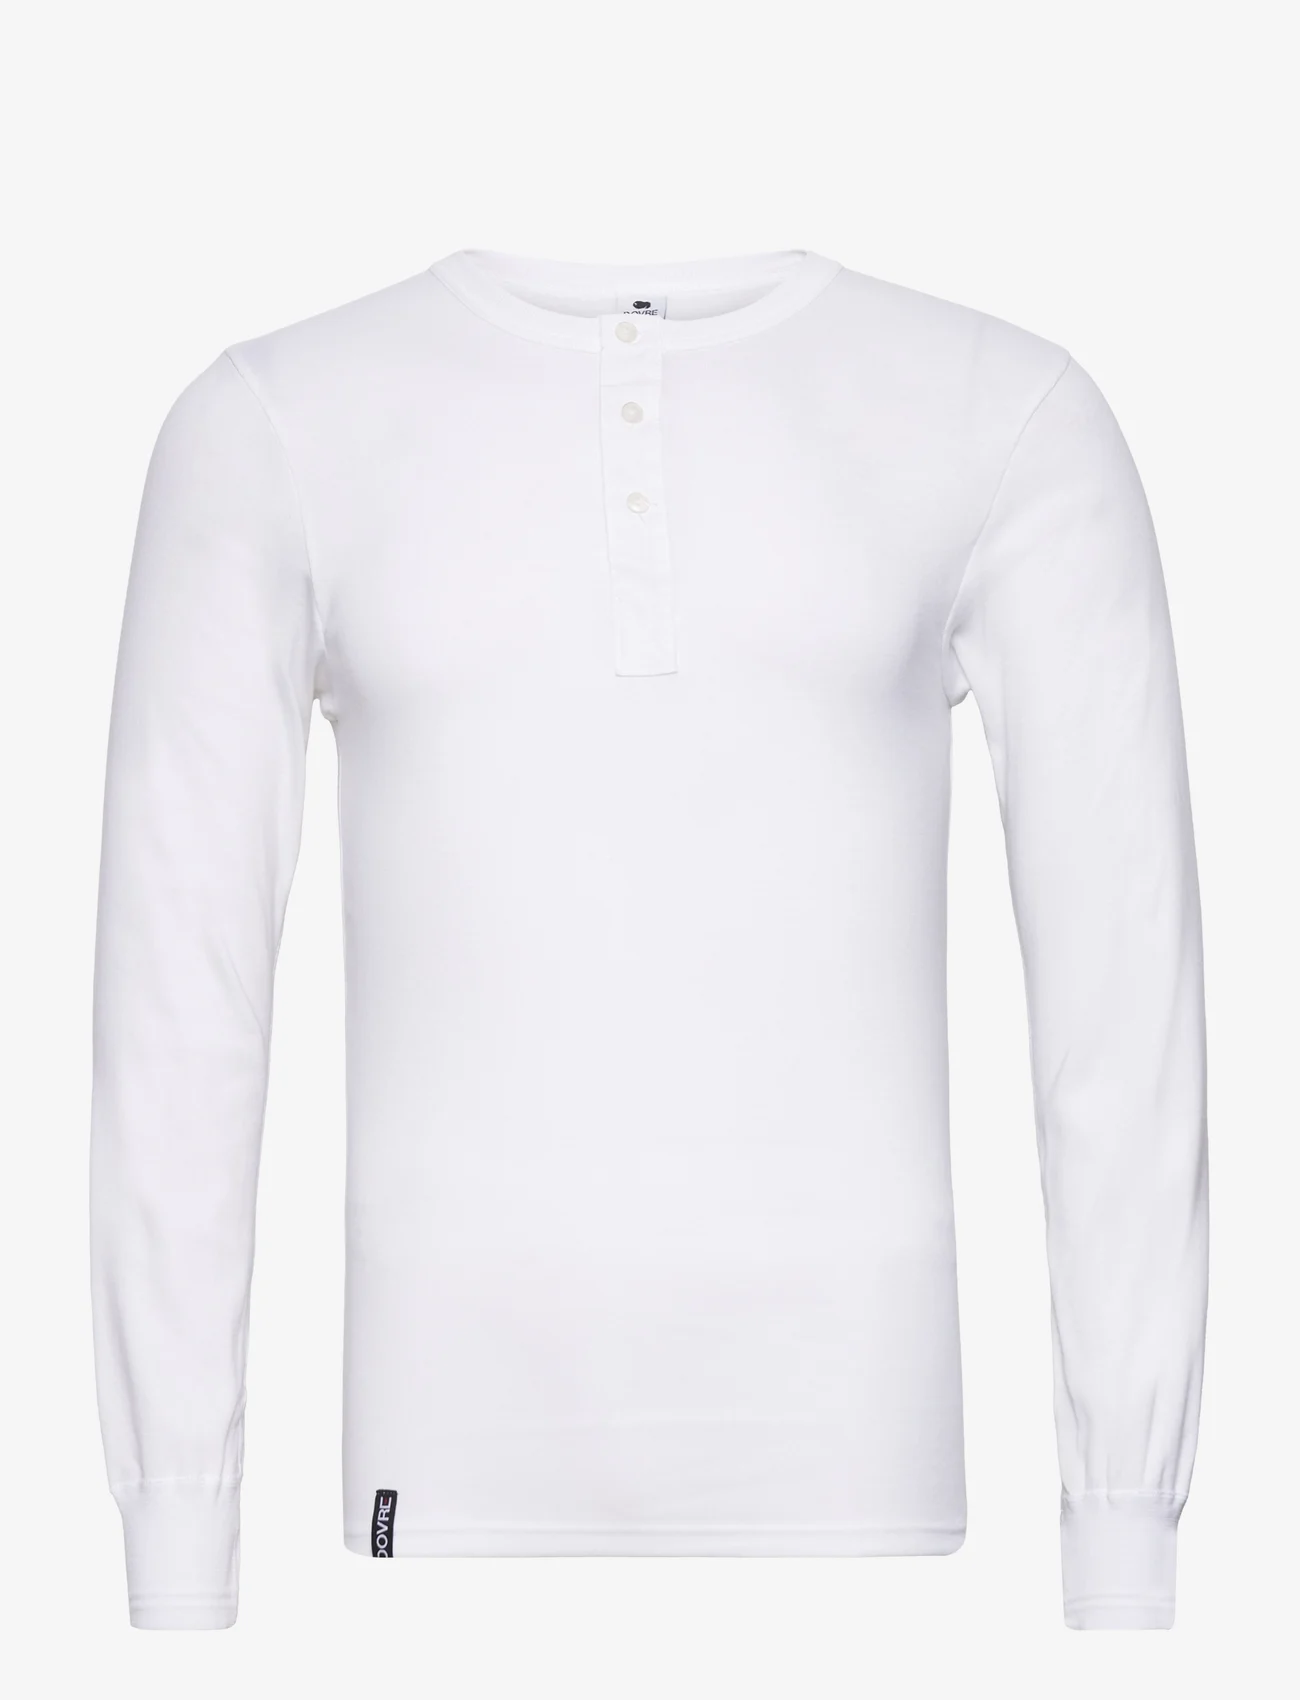 Dovre - Dovre T-Shirt 1/1 ærme/stolpe - nordic style - white - 0